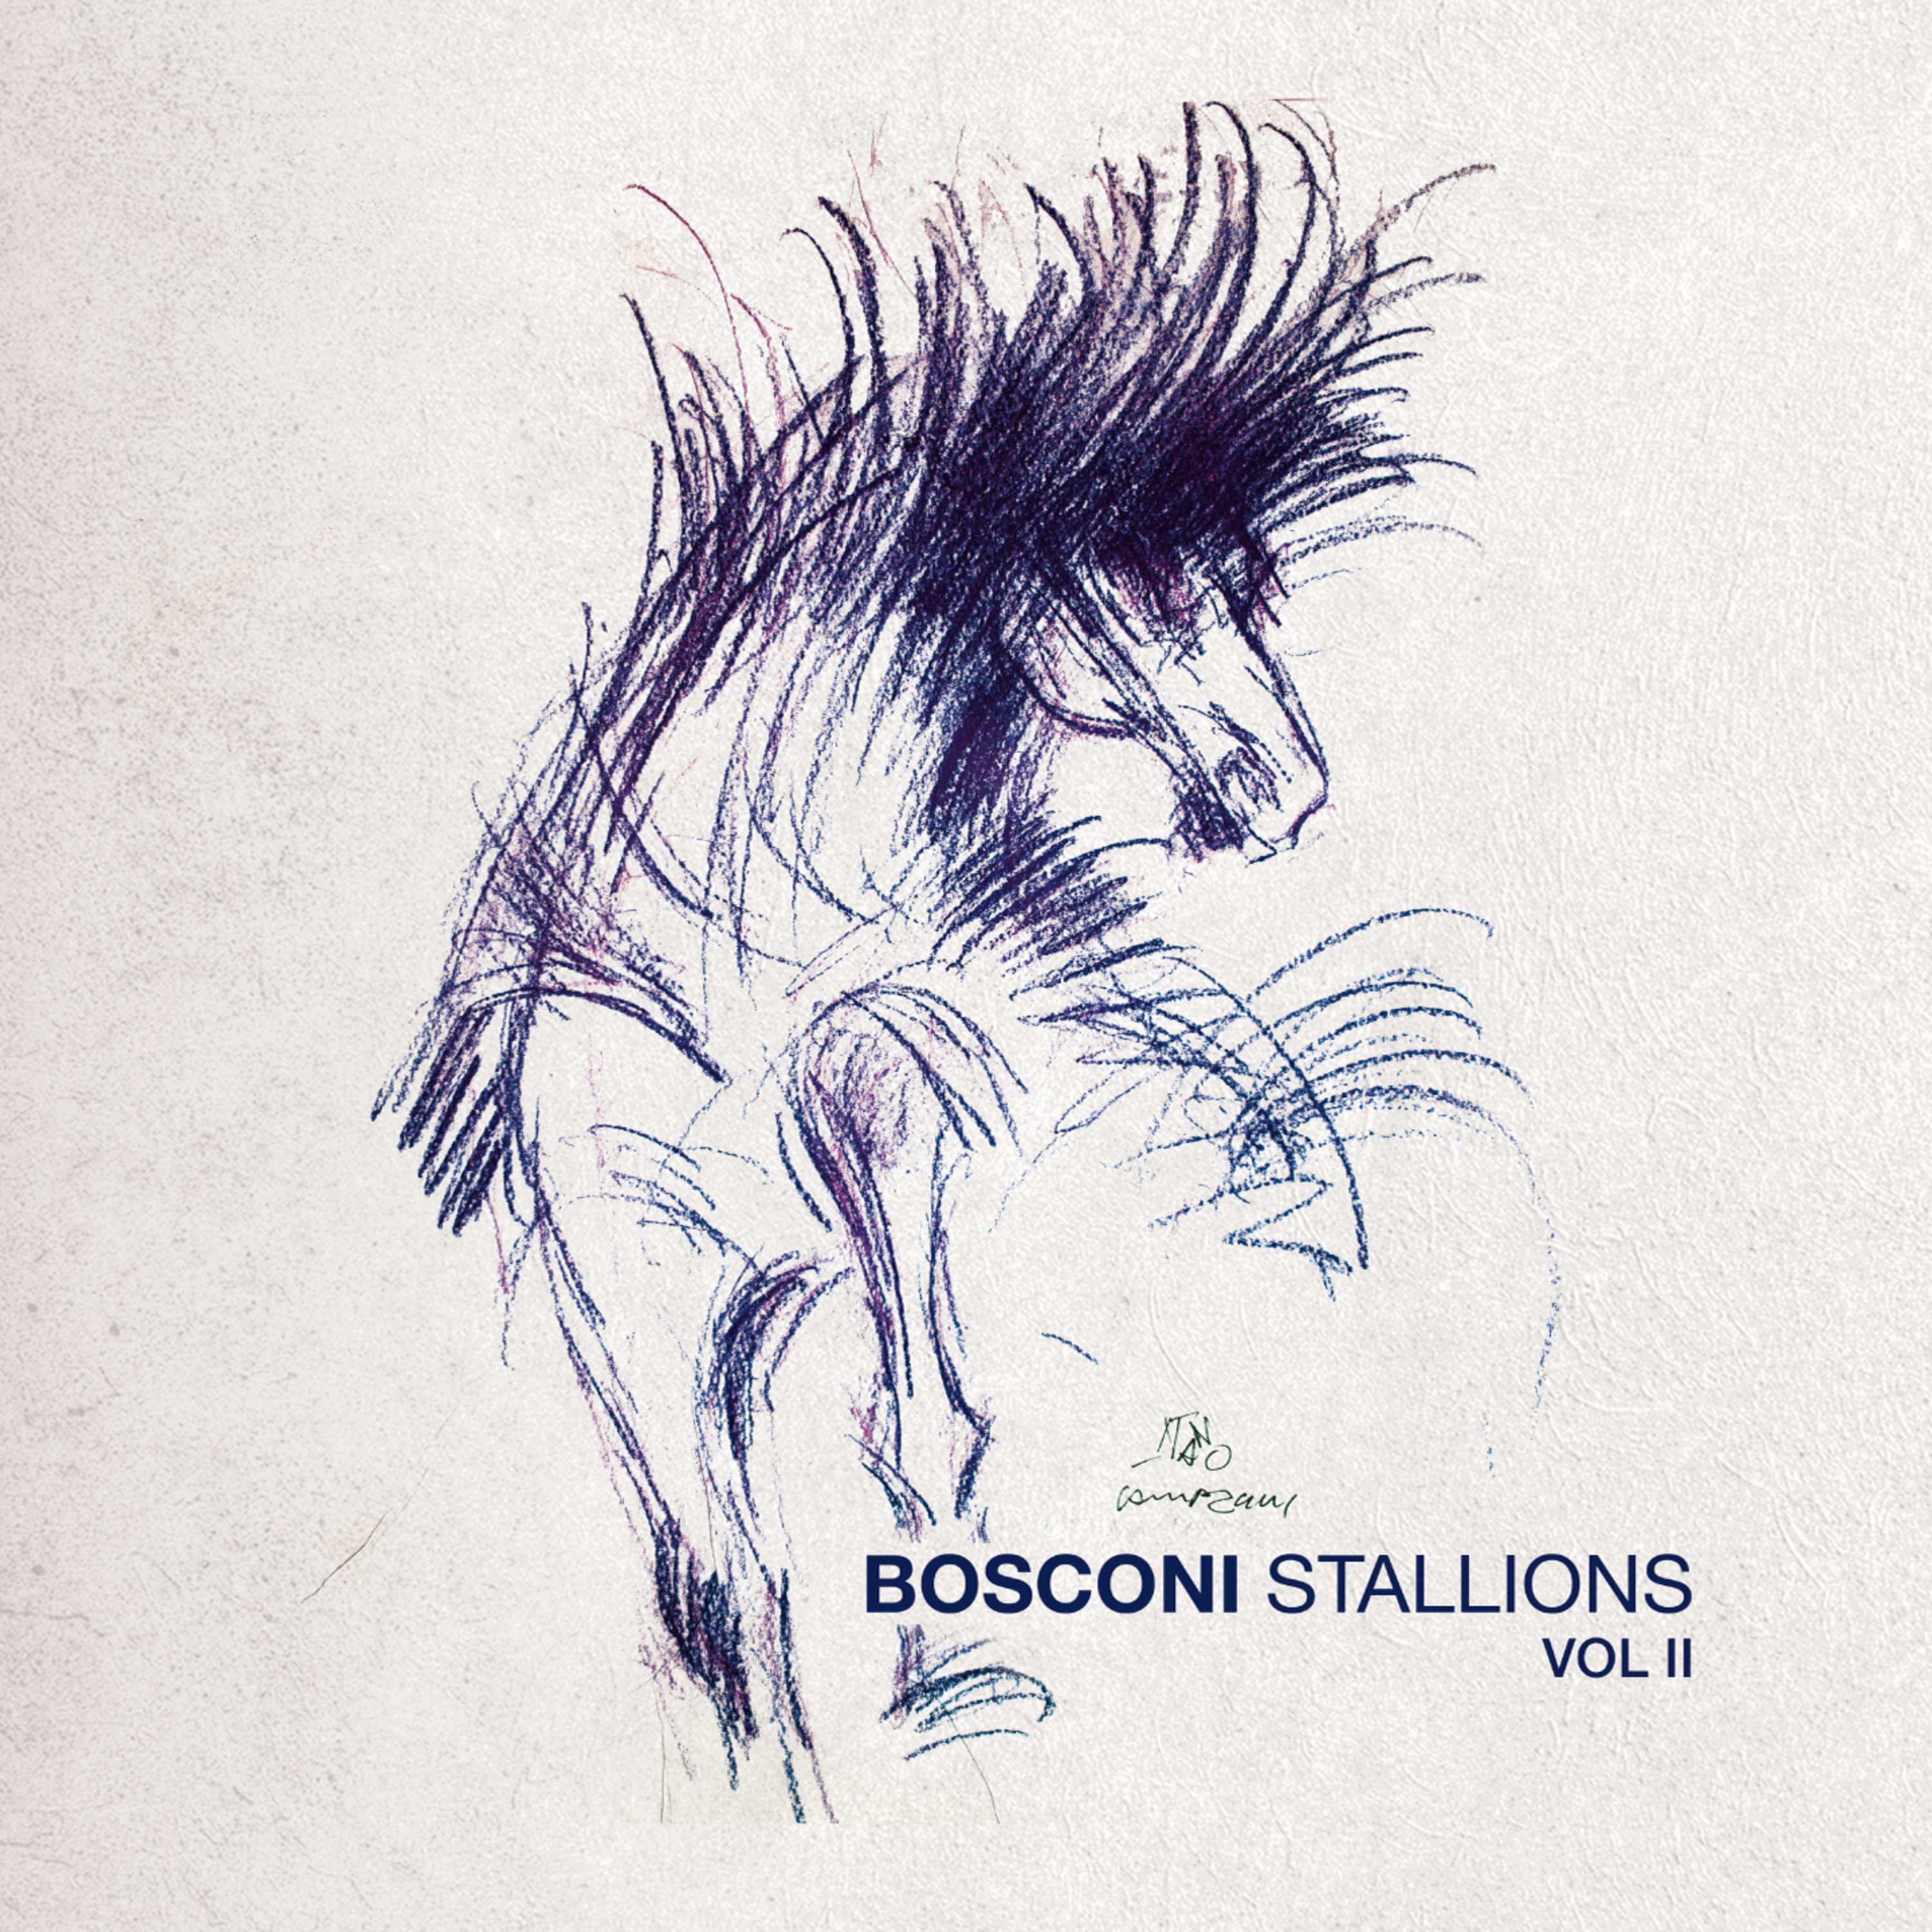 Bosconi Stallions Vol.2 - 10 Years Of Bosconi Records